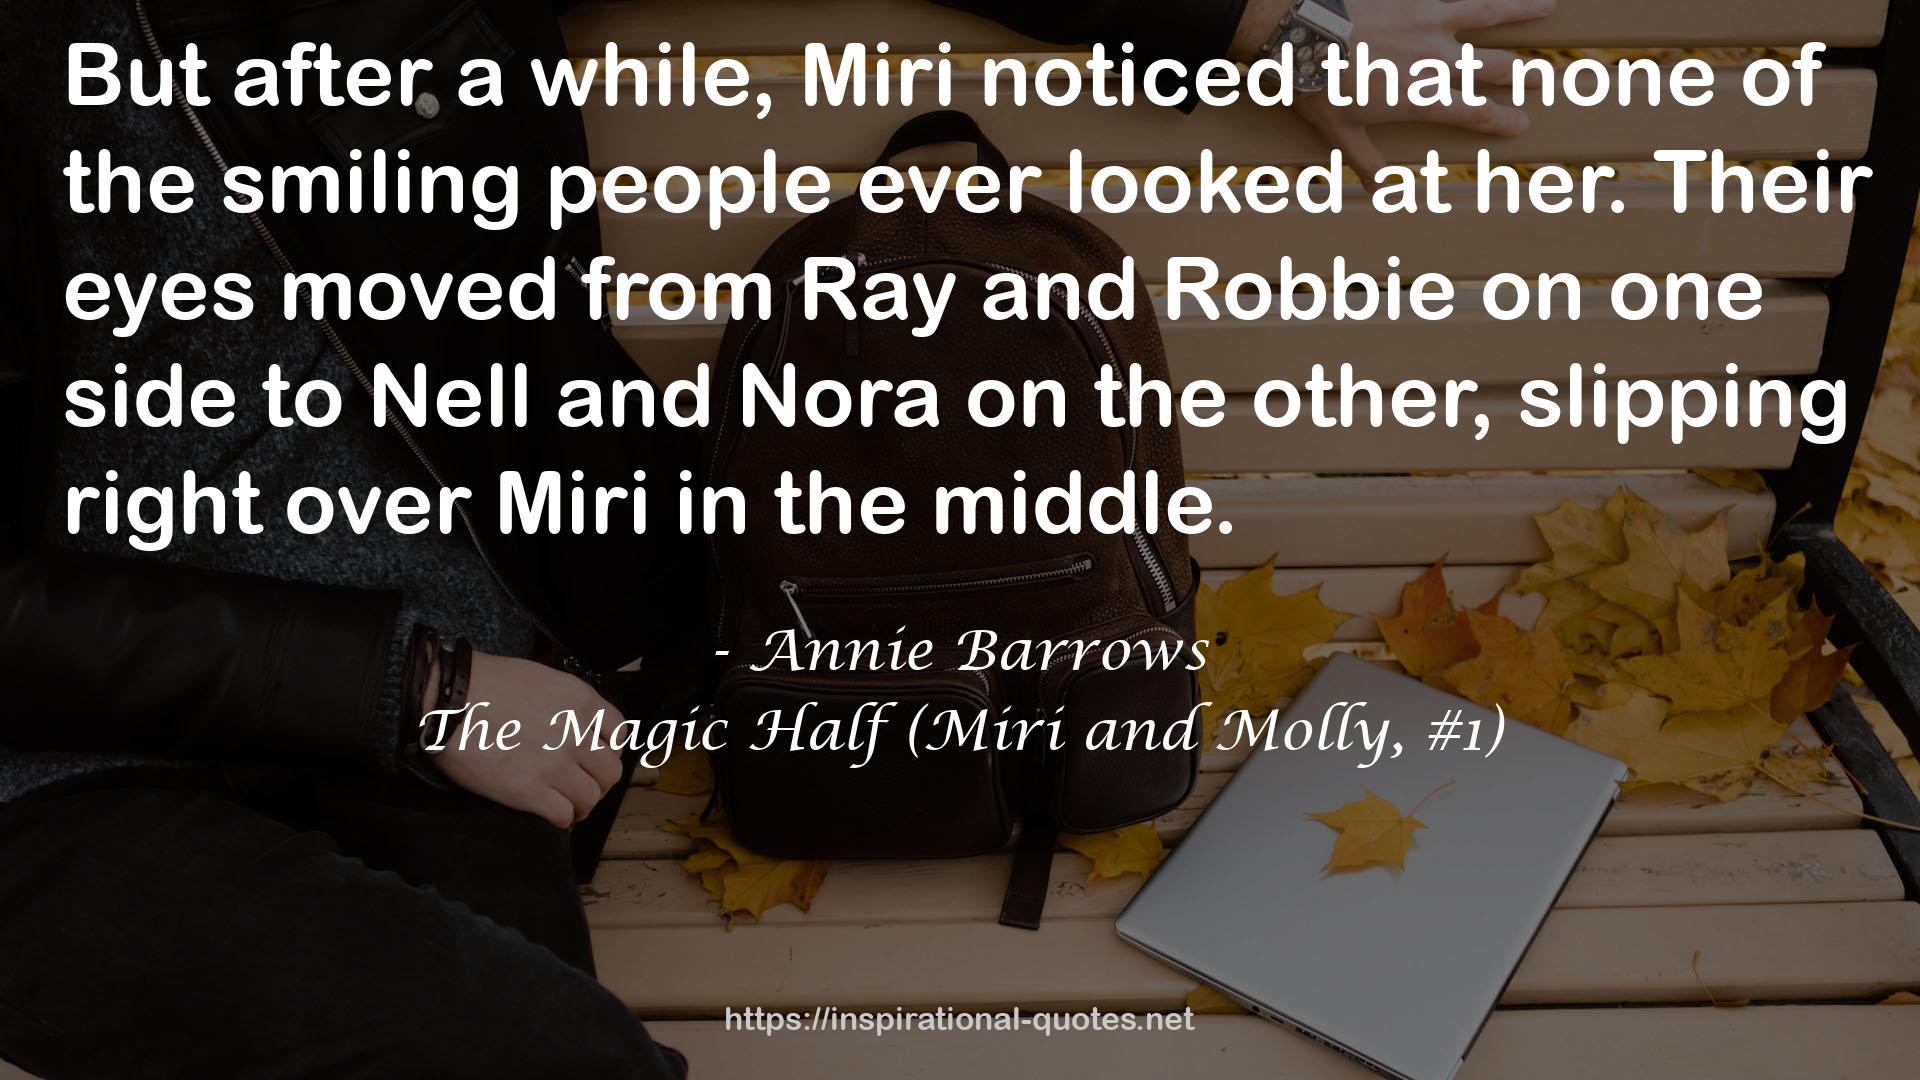 The Magic Half (Miri and Molly, #1) QUOTES